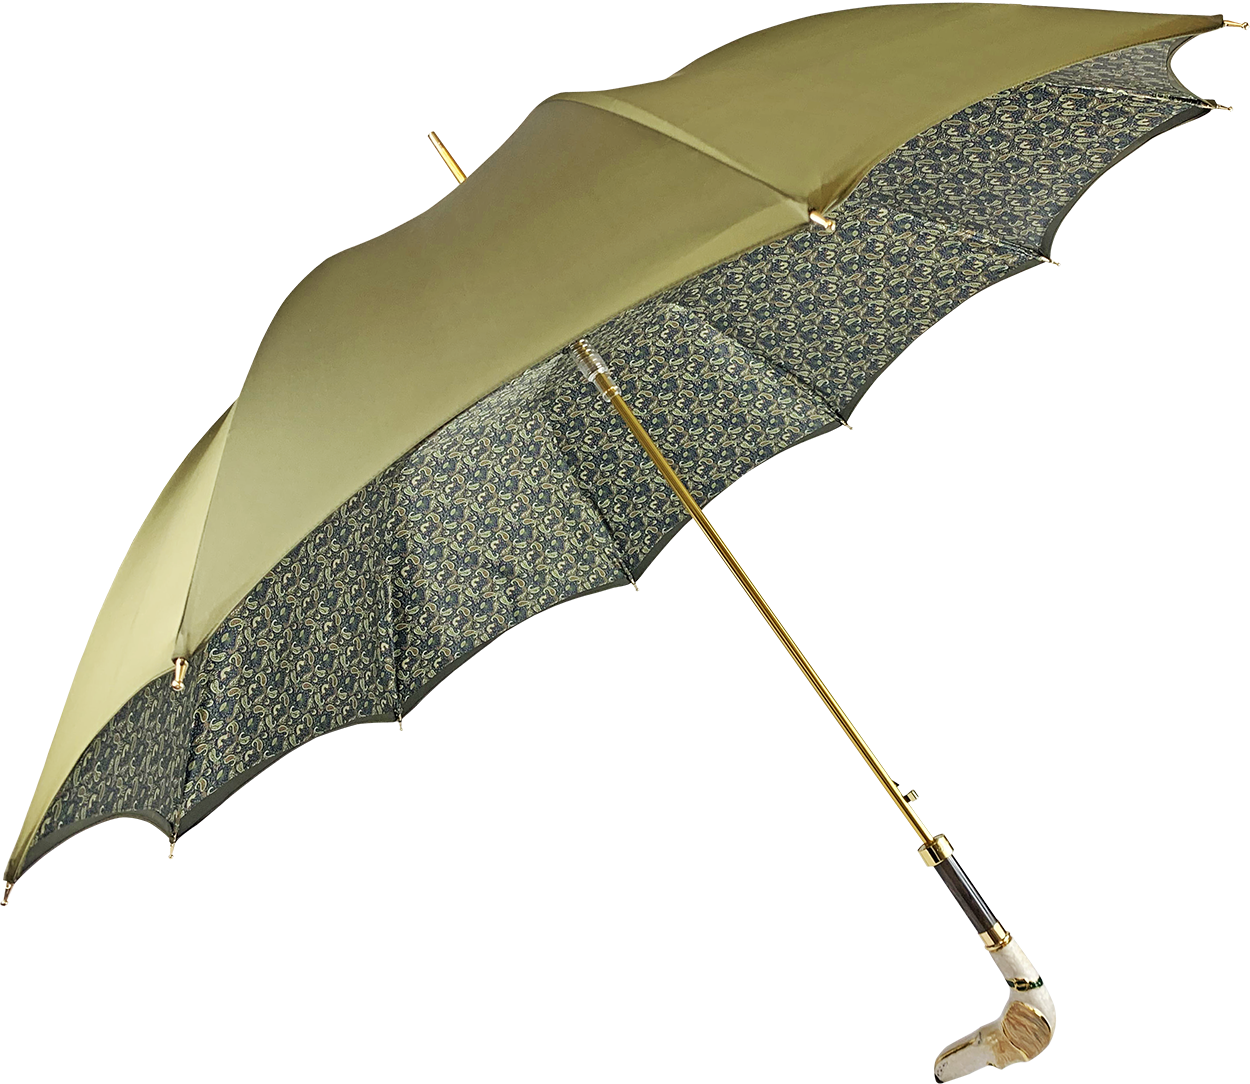 Exclusive hand-painted greyhound umbrella